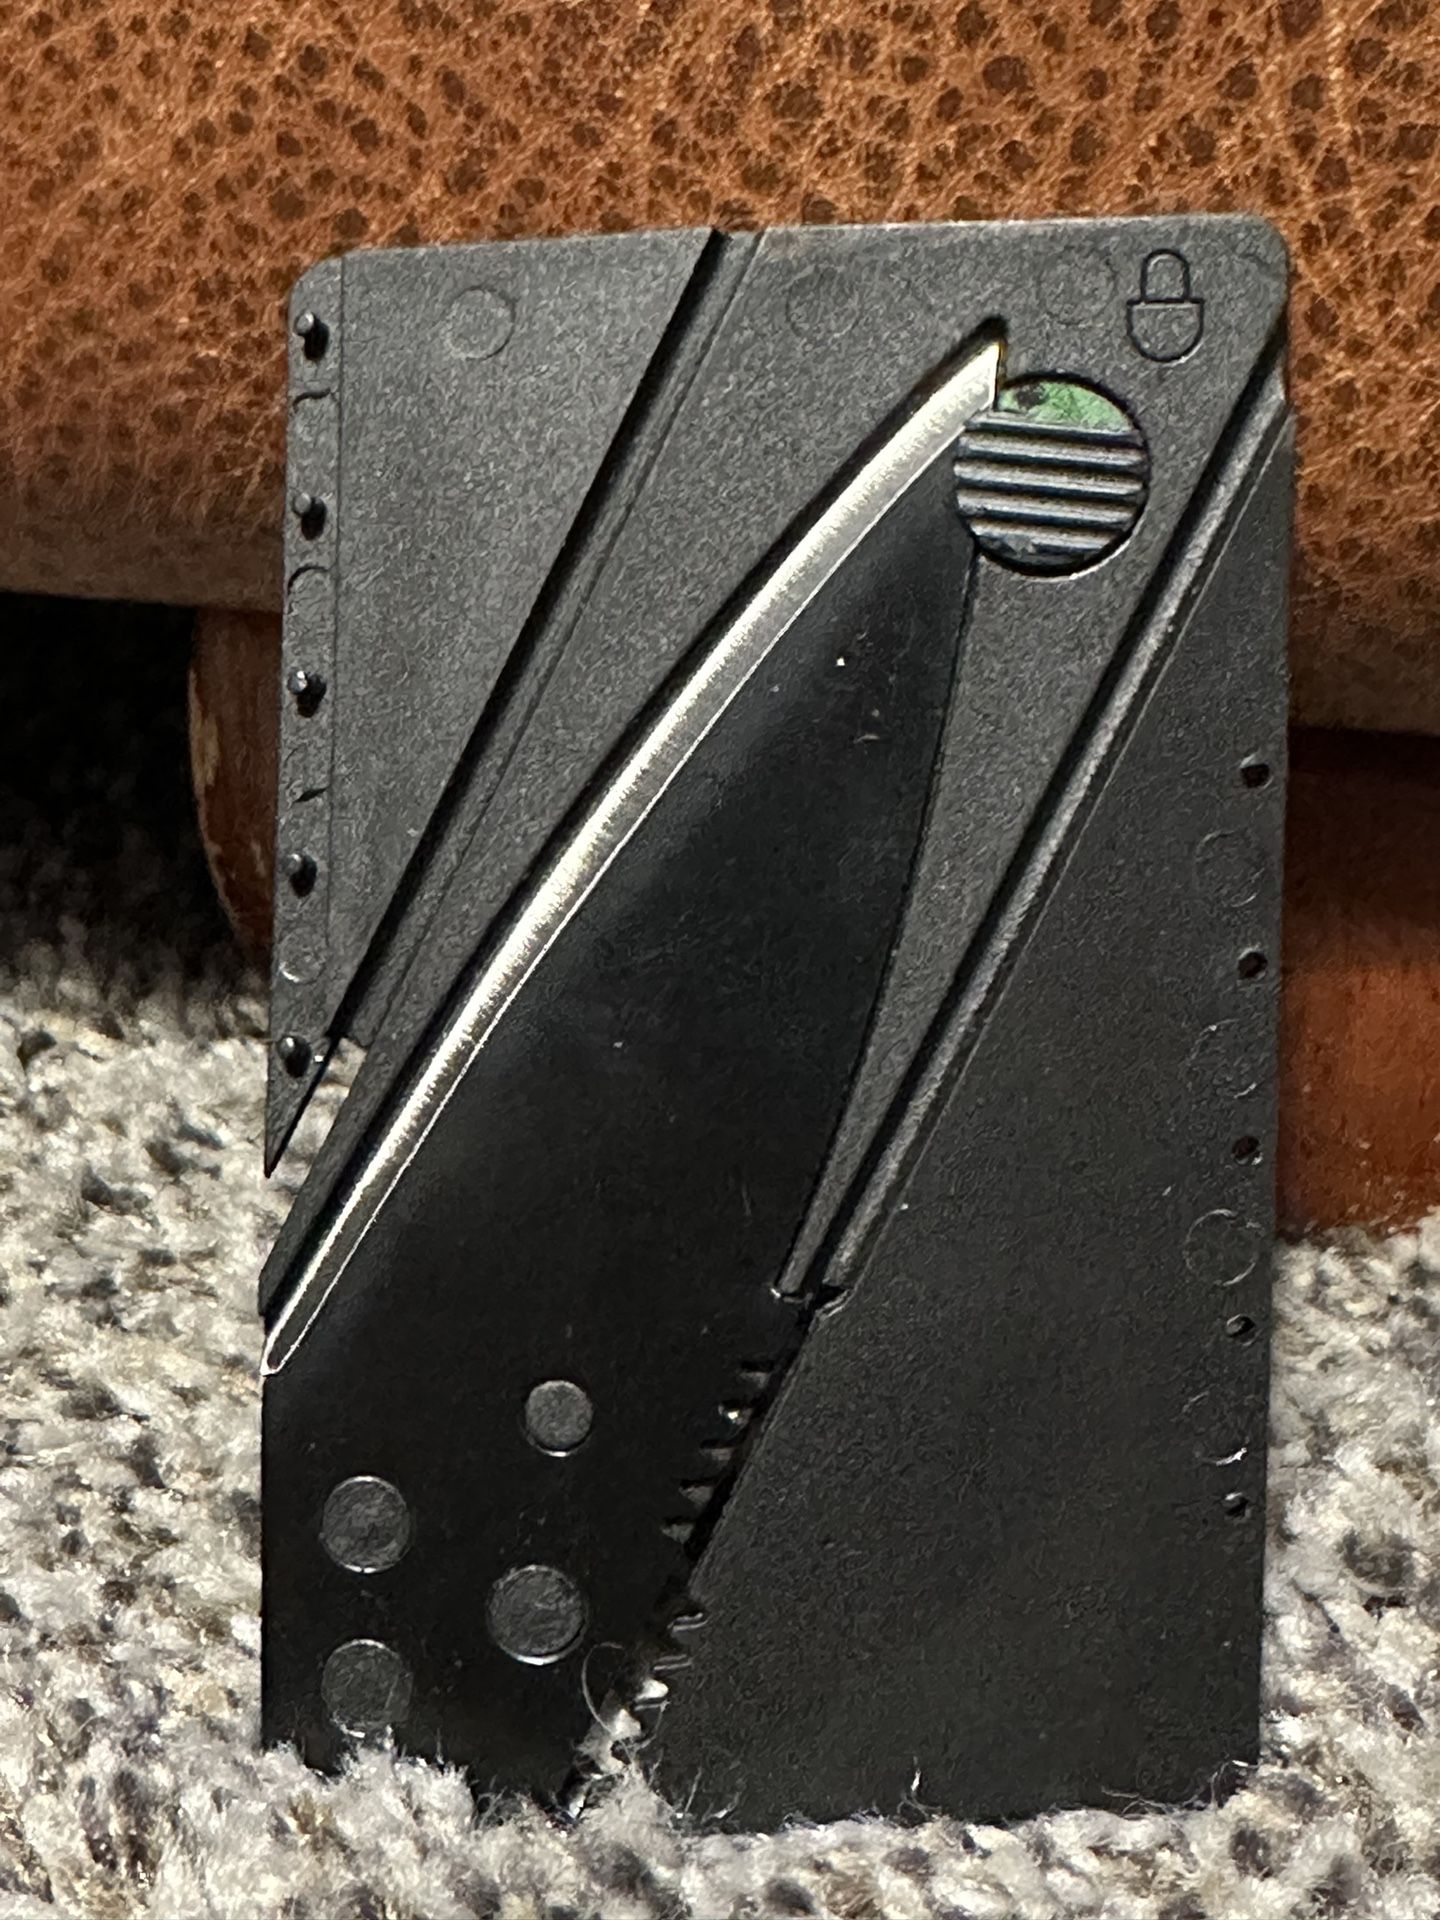 Foldable Wallet Knife 